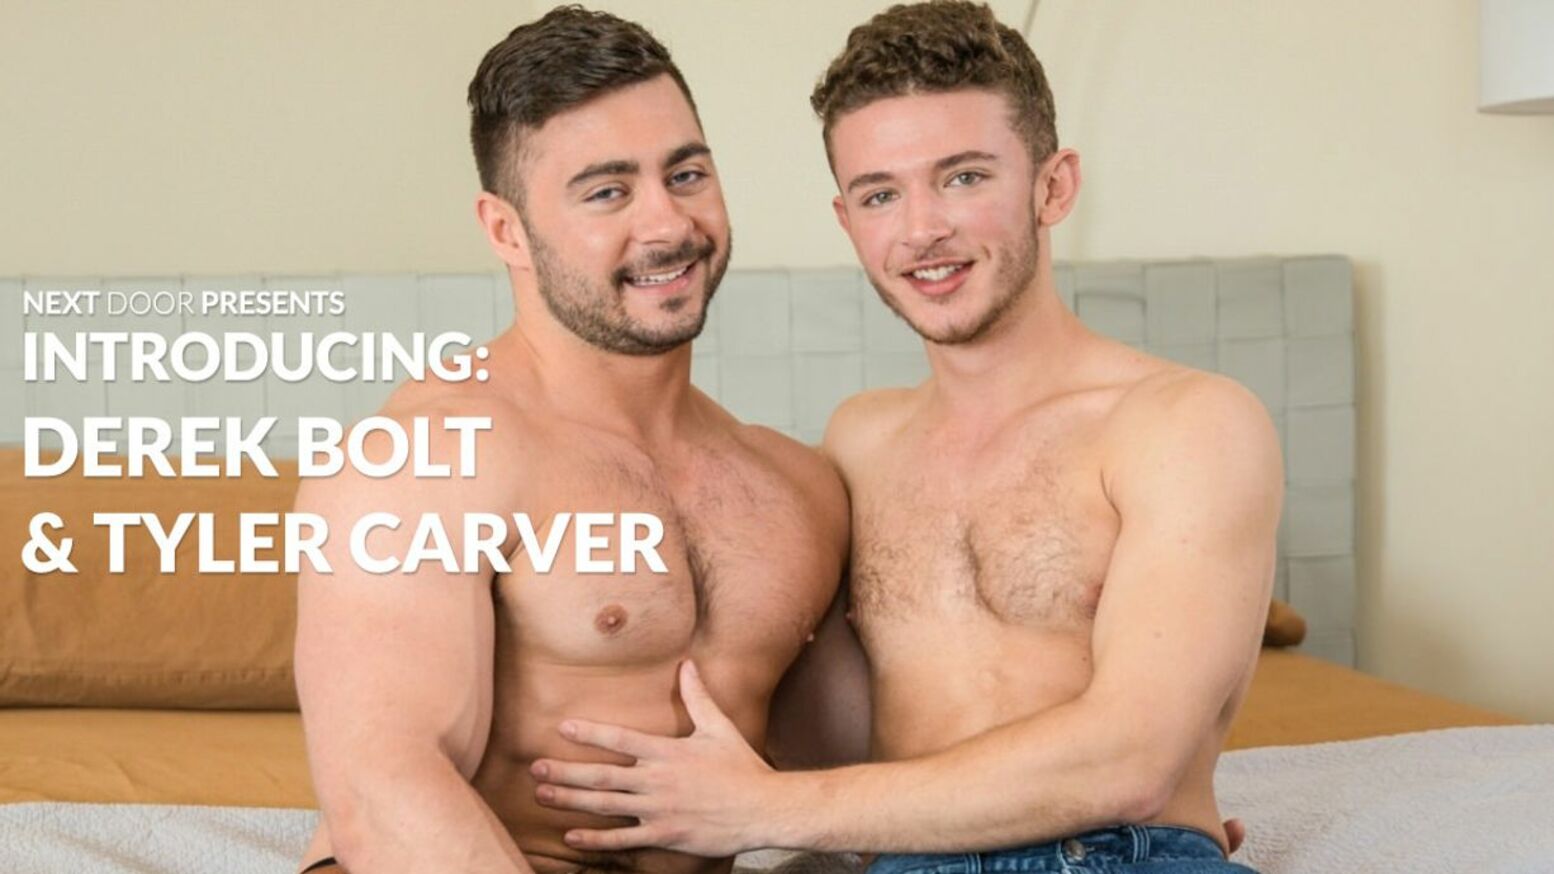 Introducing Derek Bolt & Tyler Carver